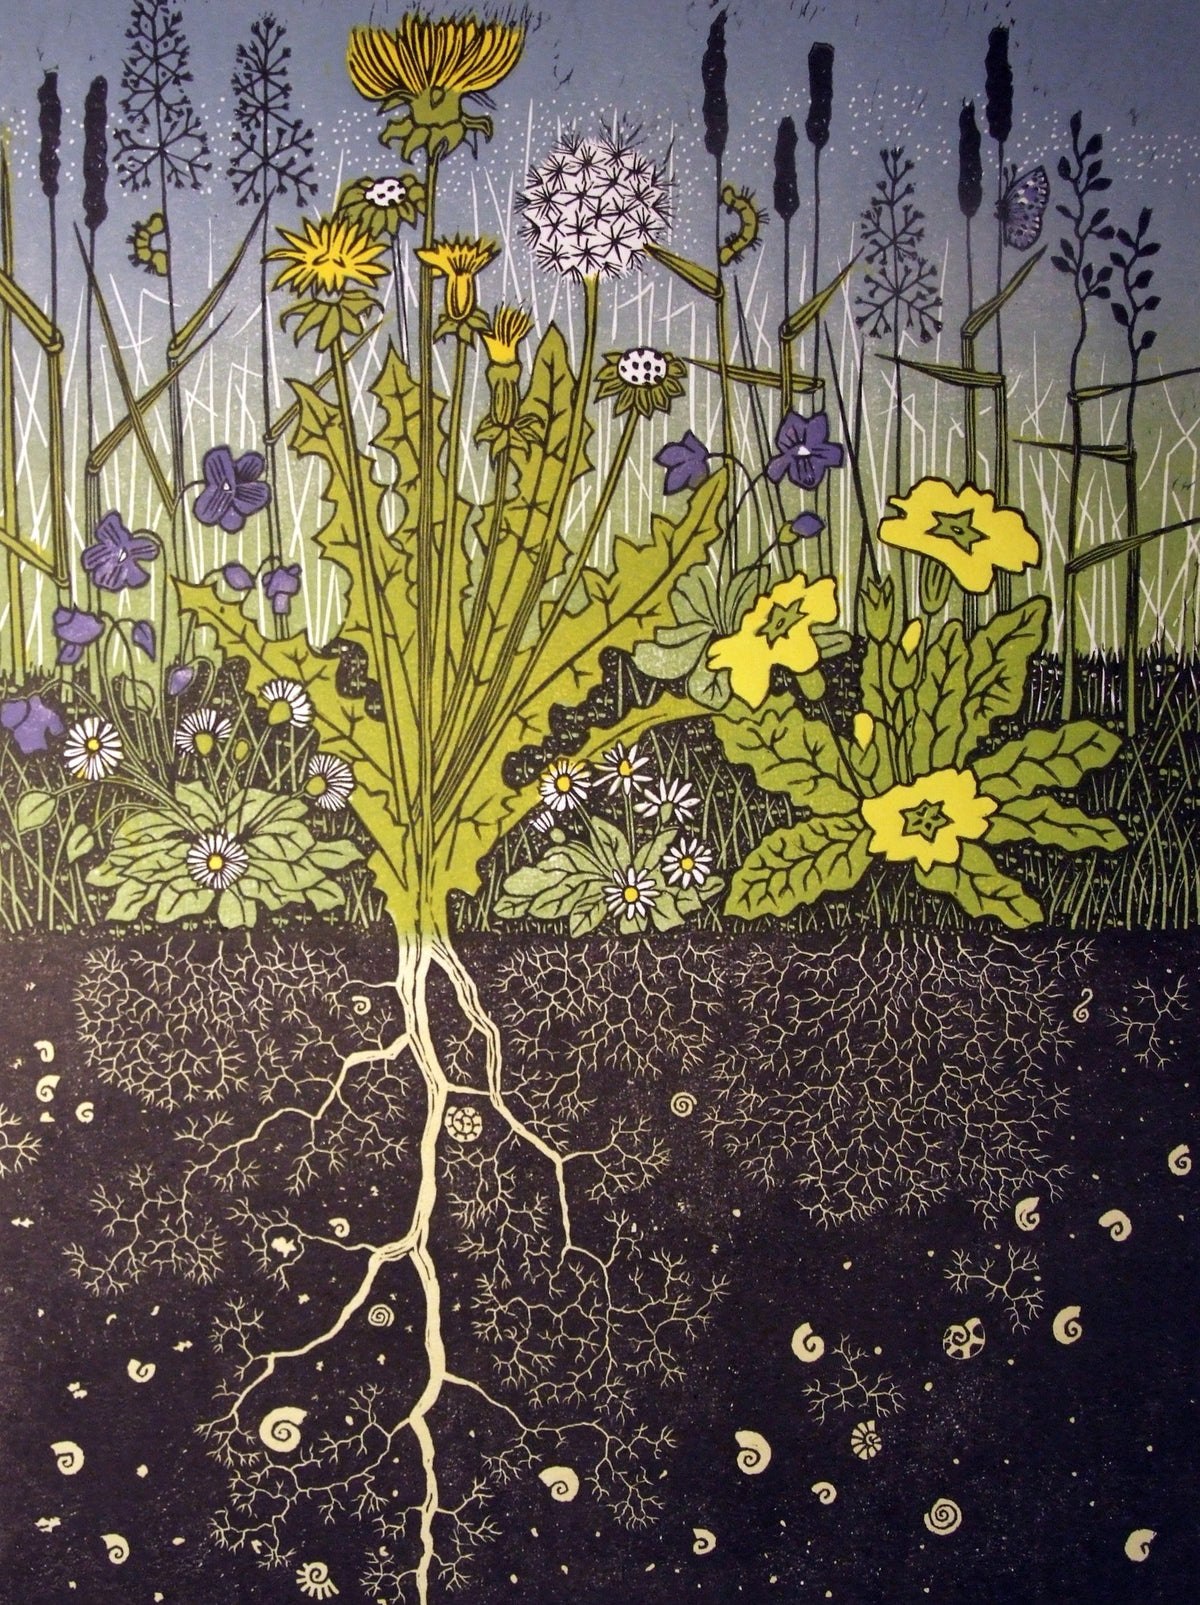 Linocut "Spring Turf" by Diana Ashdown